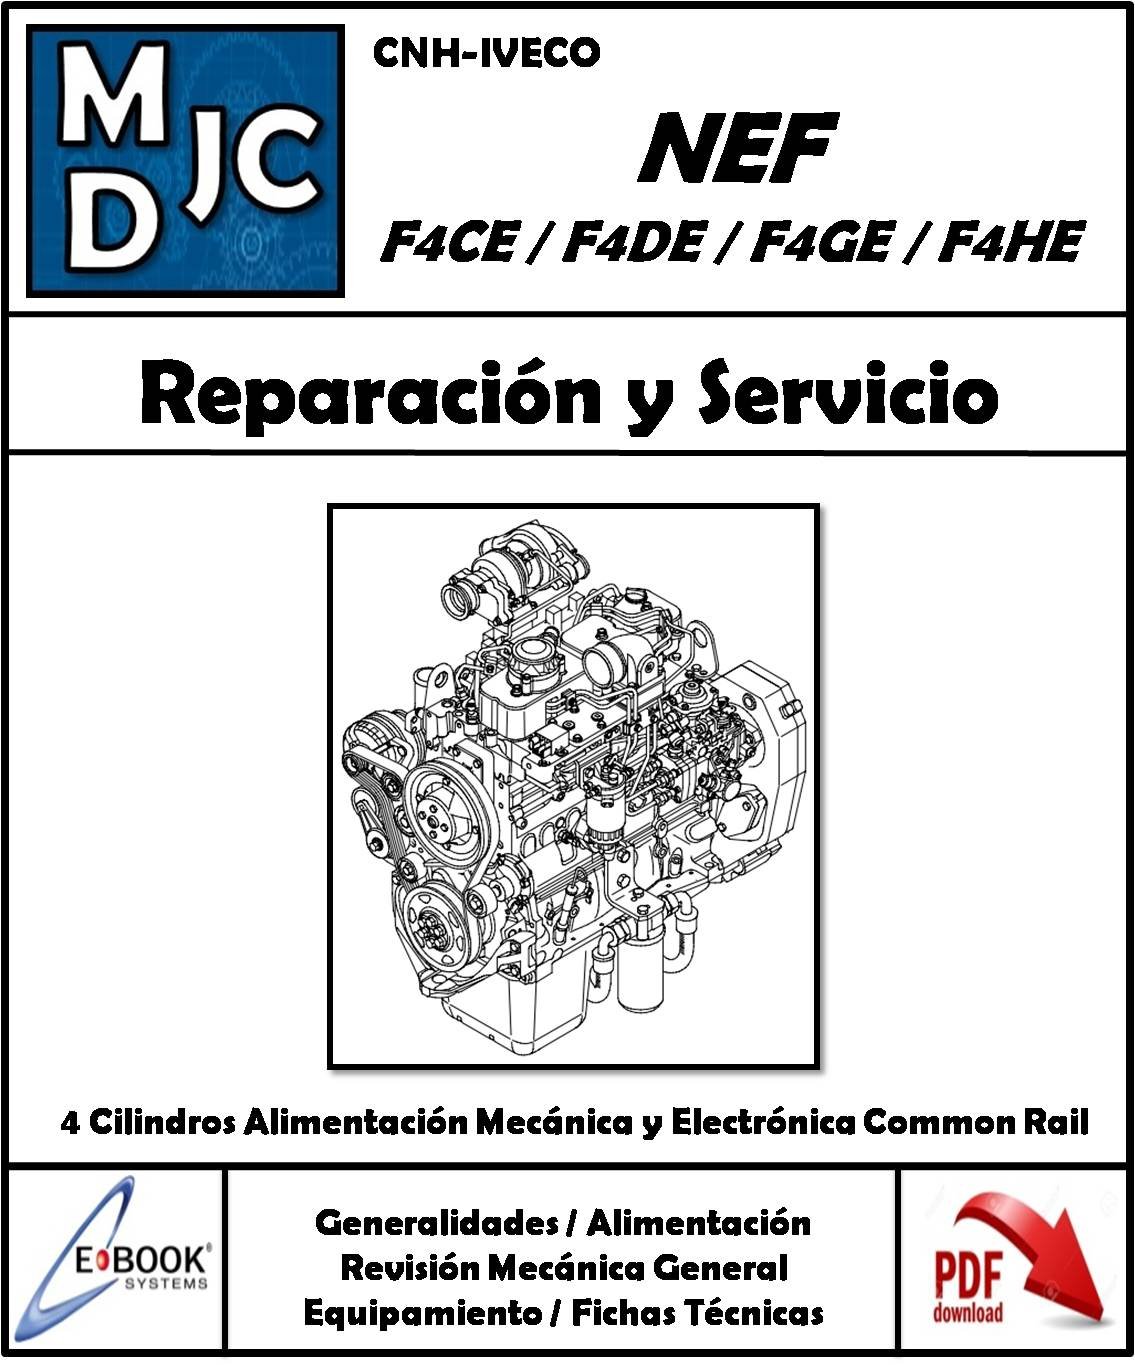 Iveco Motores F4CE / F4DE / F4GE / F4HE - Nef Tier 3